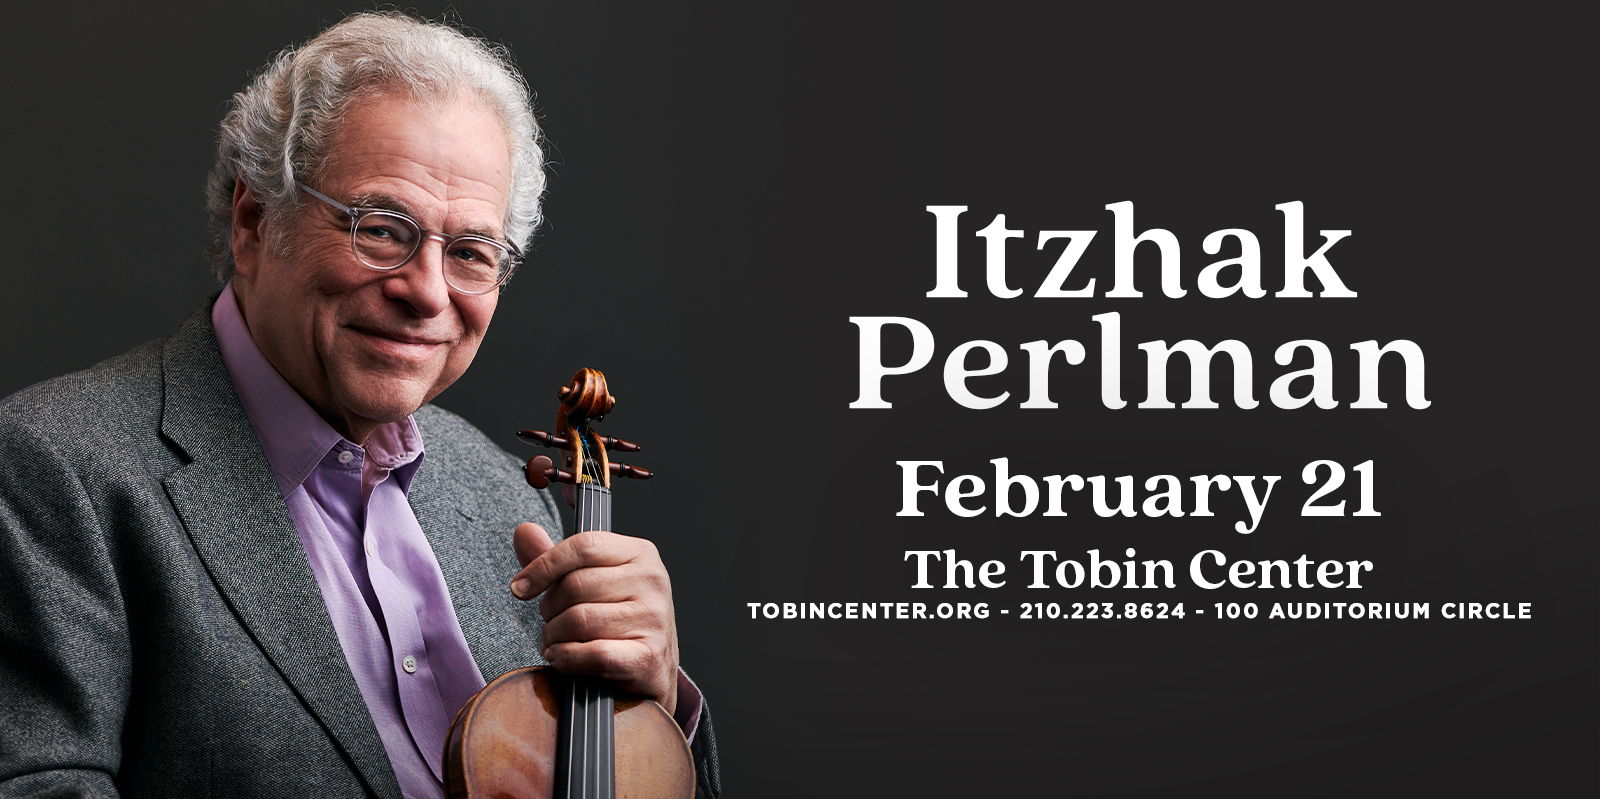 Itzhak Perlman promotional image